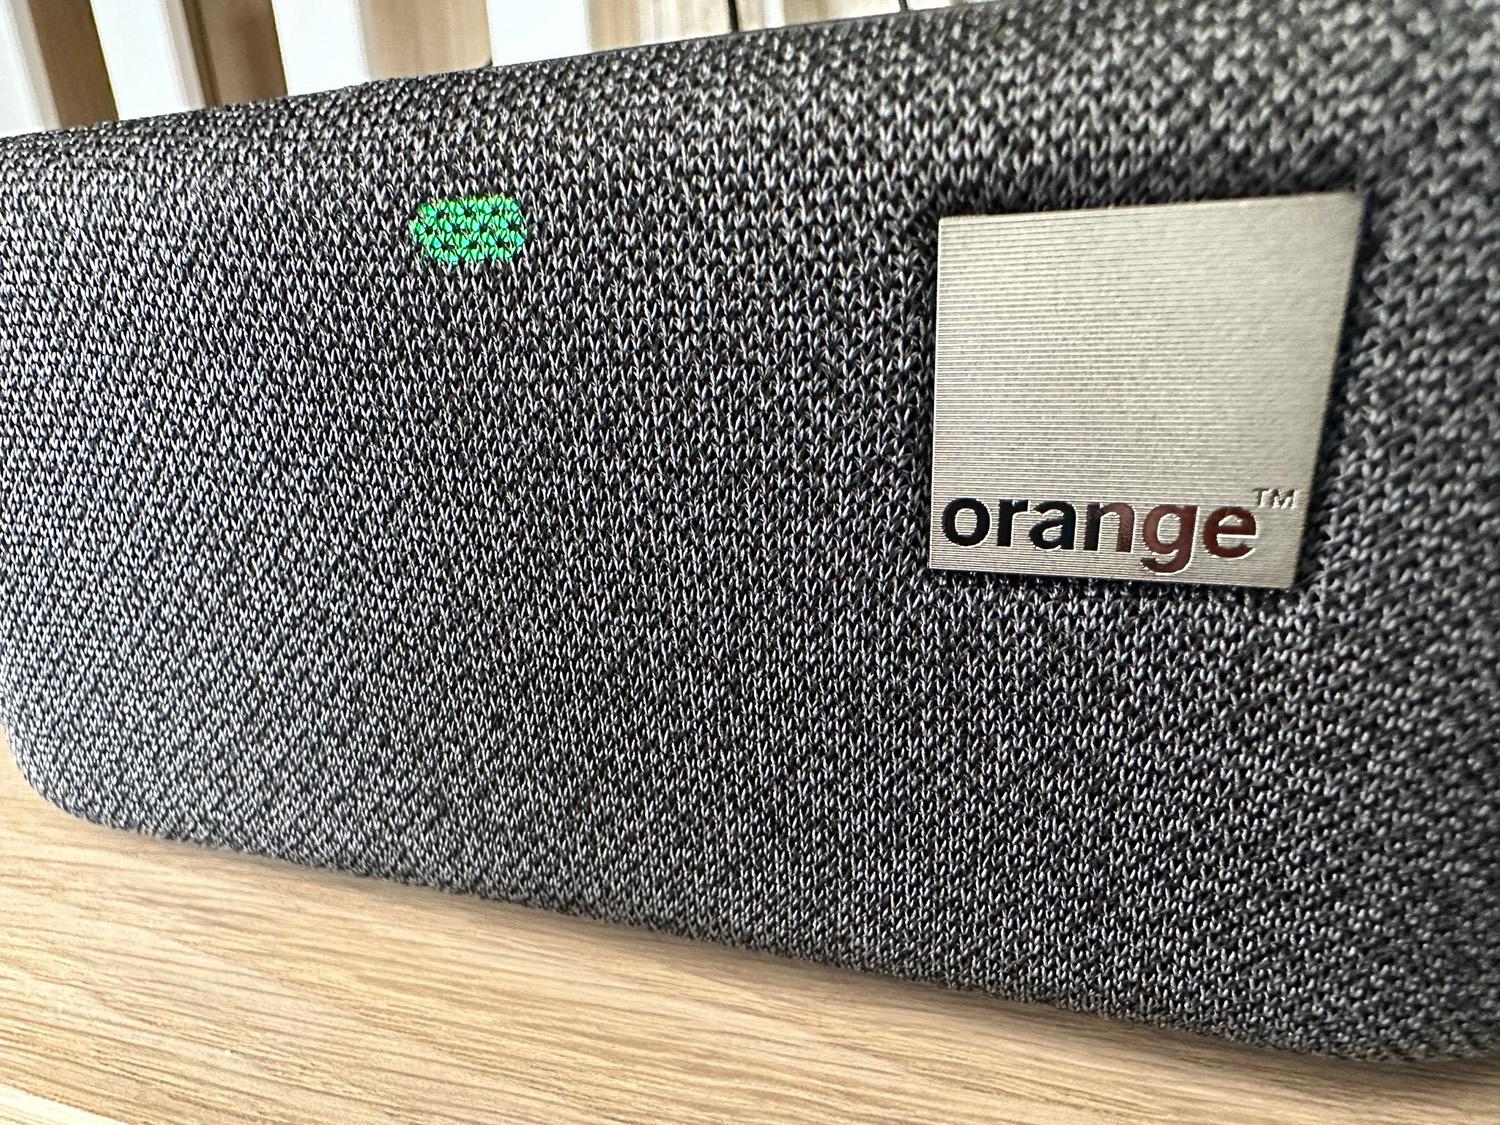 Decodificador premium Infinity HomeBox de 📺 Orange TV